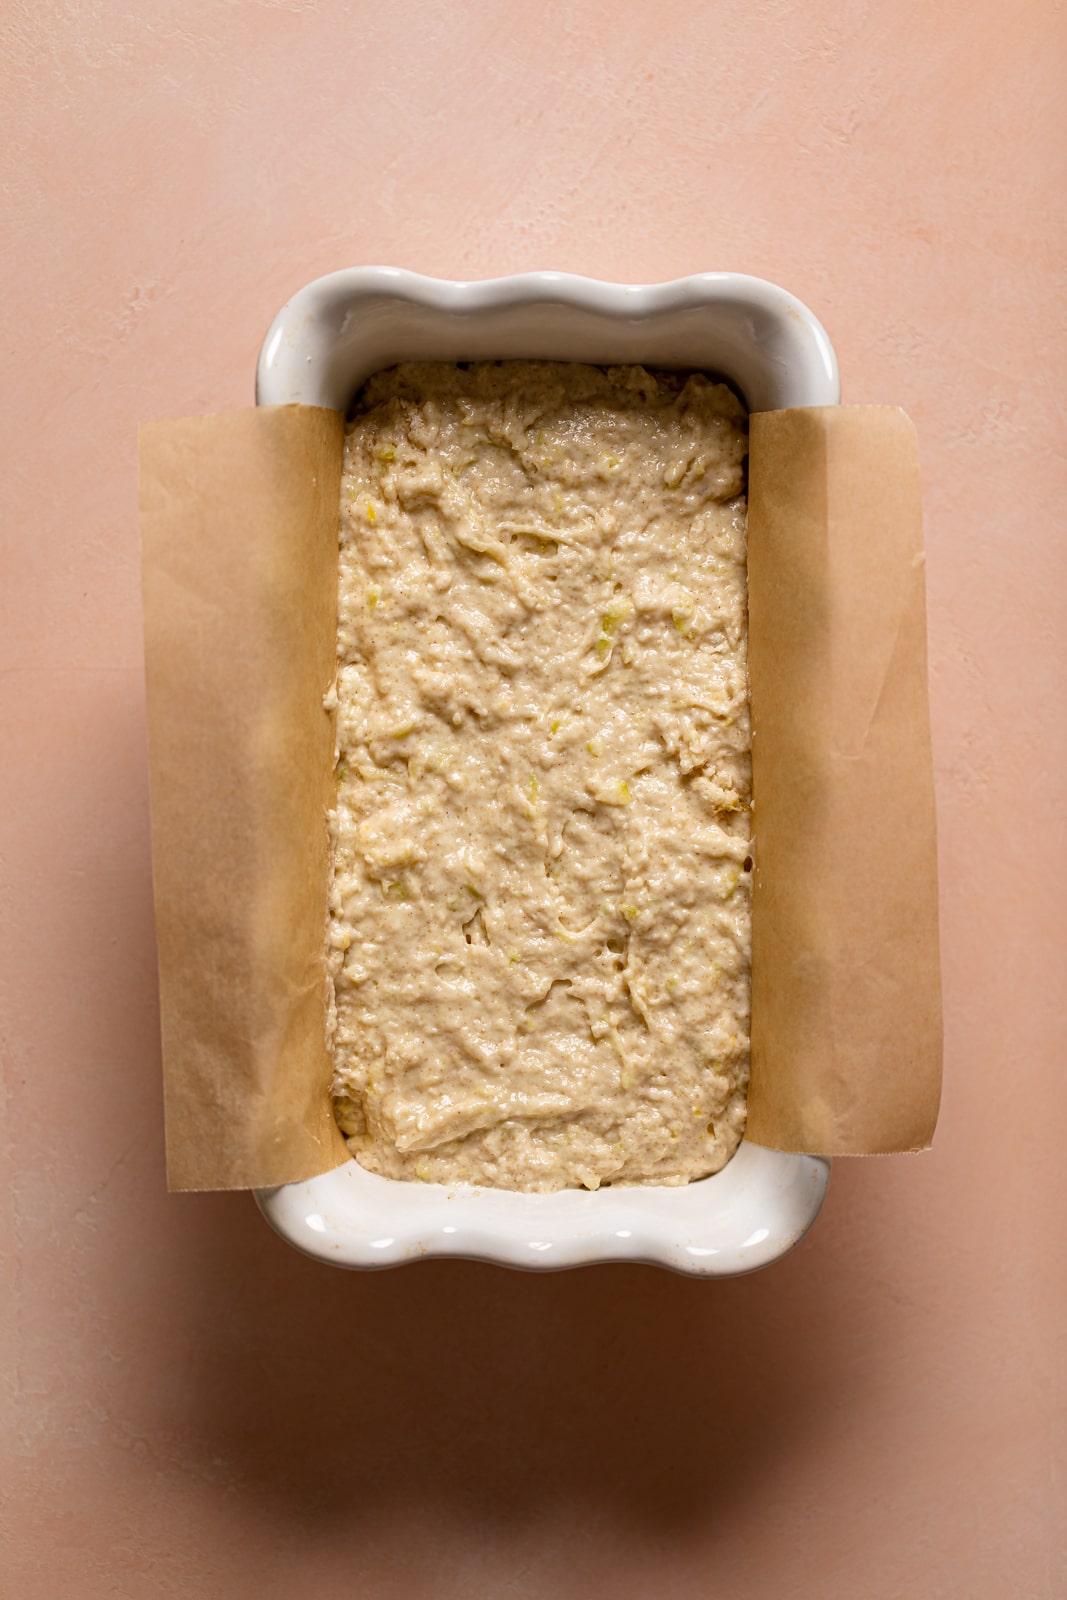 Baking pan full of Vegan Lemon Zucchini Bread dough